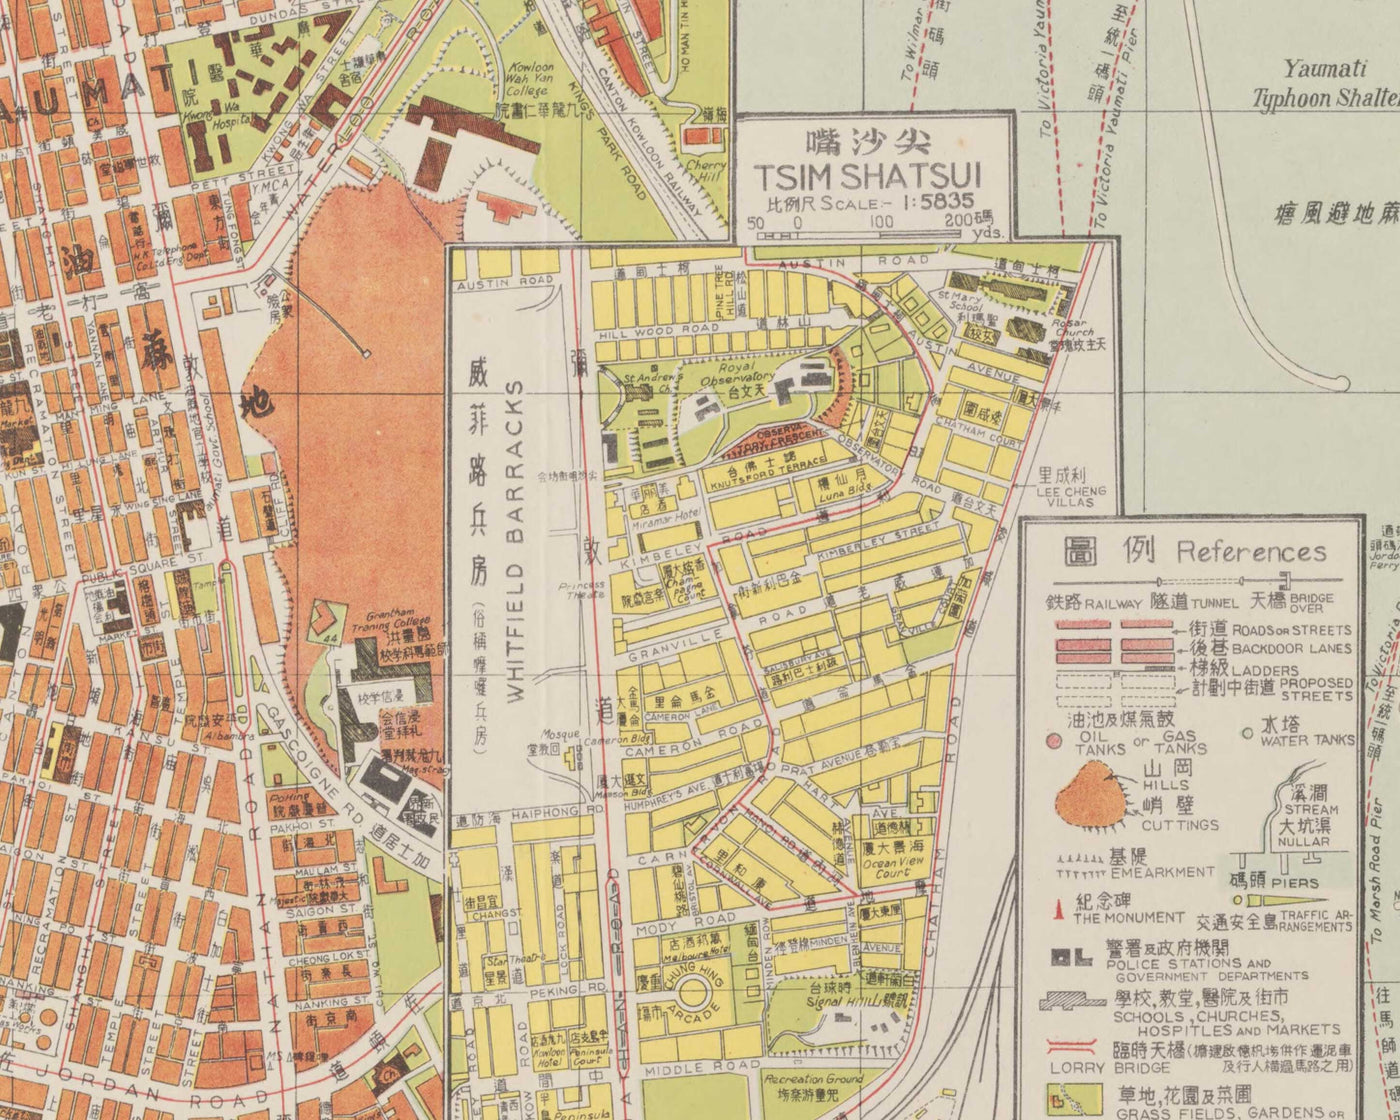 Mapa antiguo de Hong Kong (Kowloon), 1957 por Chan King Hon - Yau Ma Tei, Mong Kok, Kowloon City, King's Park, Yau Yat Chuen